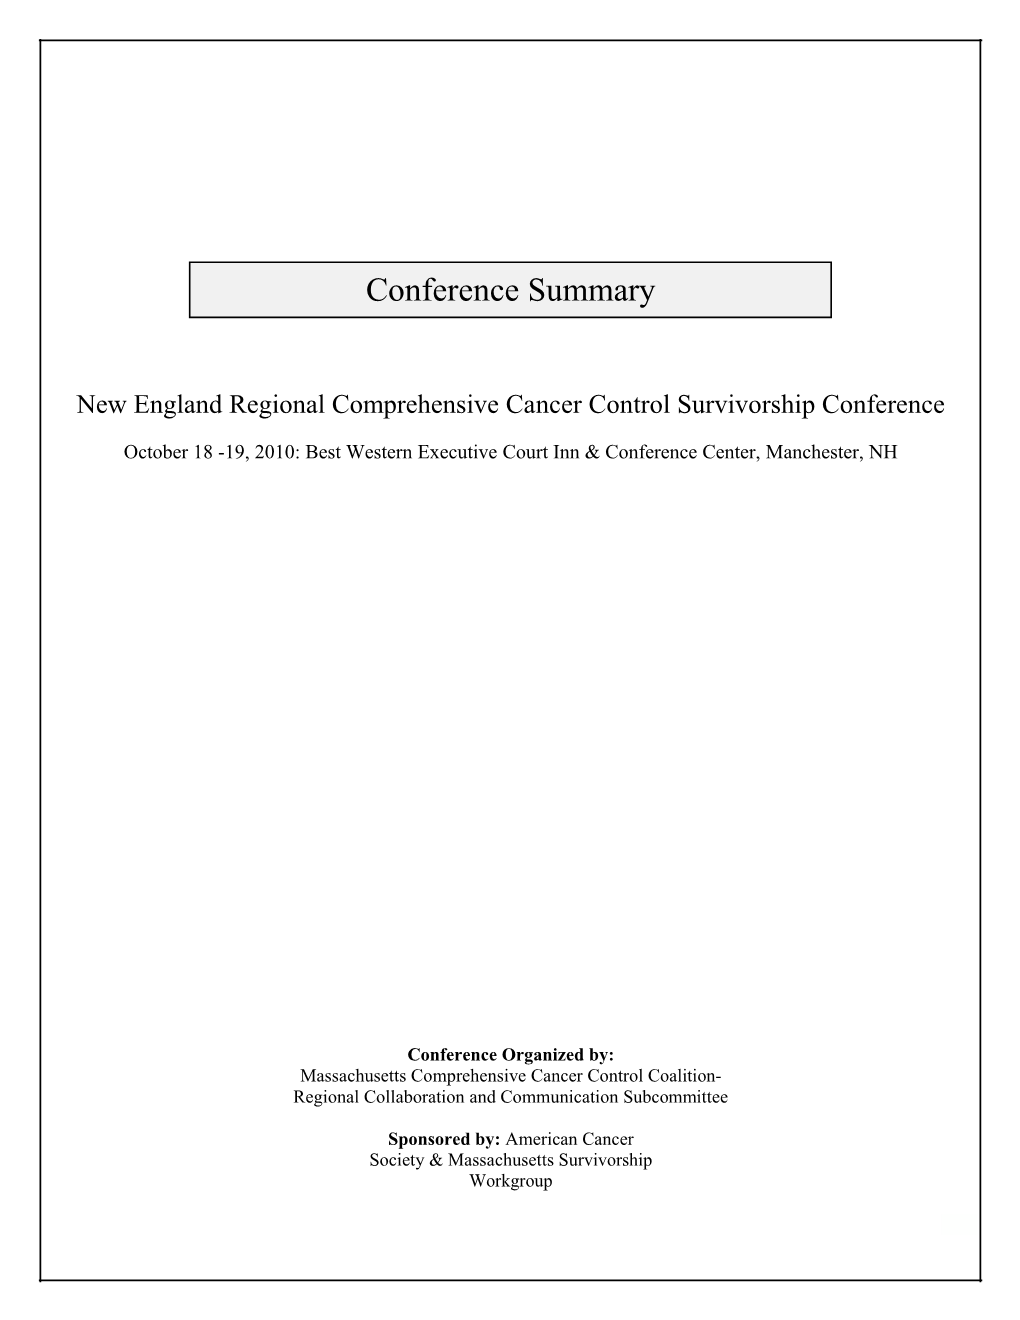 New England Regional Comprehensive Cancer Control Survivorship Conference